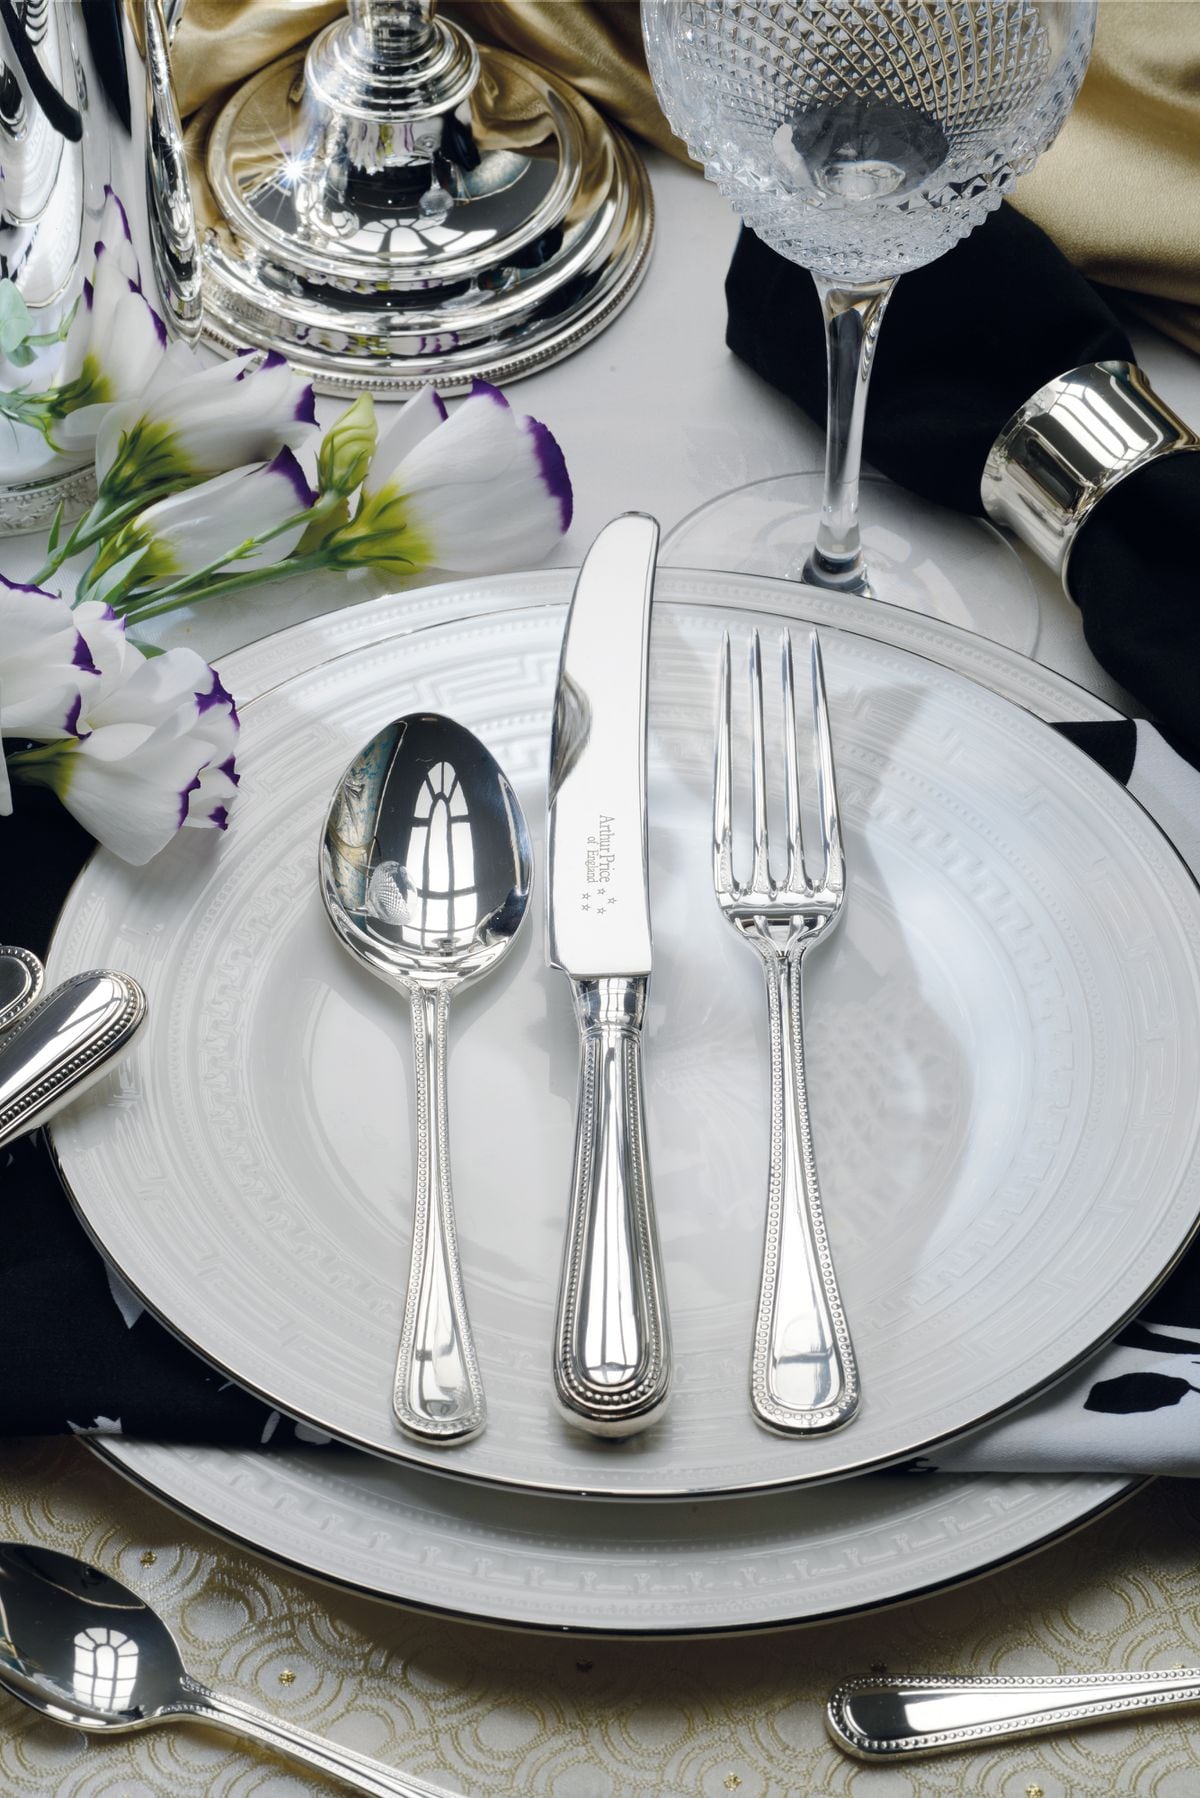 Arthur Price cutlery is celebrating 120 years